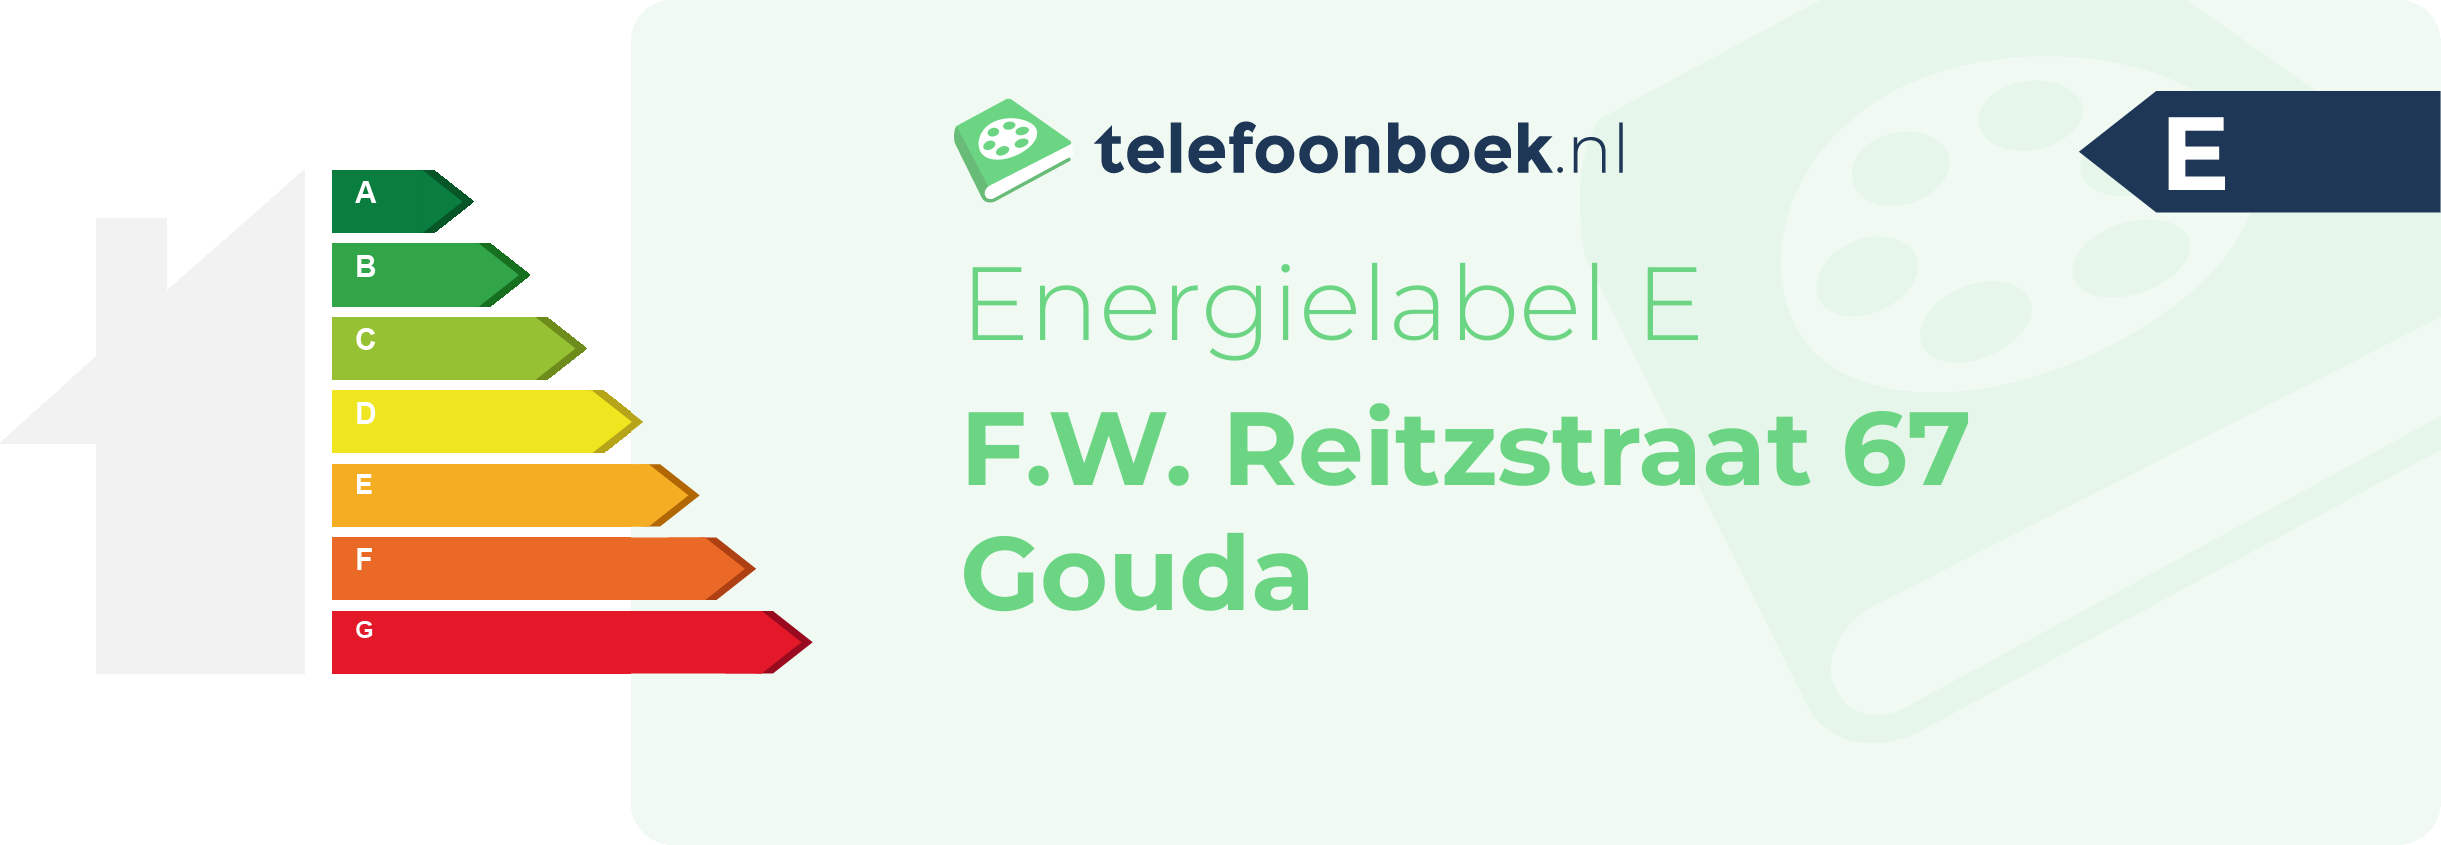 Energielabel F.W. Reitzstraat 67 Gouda